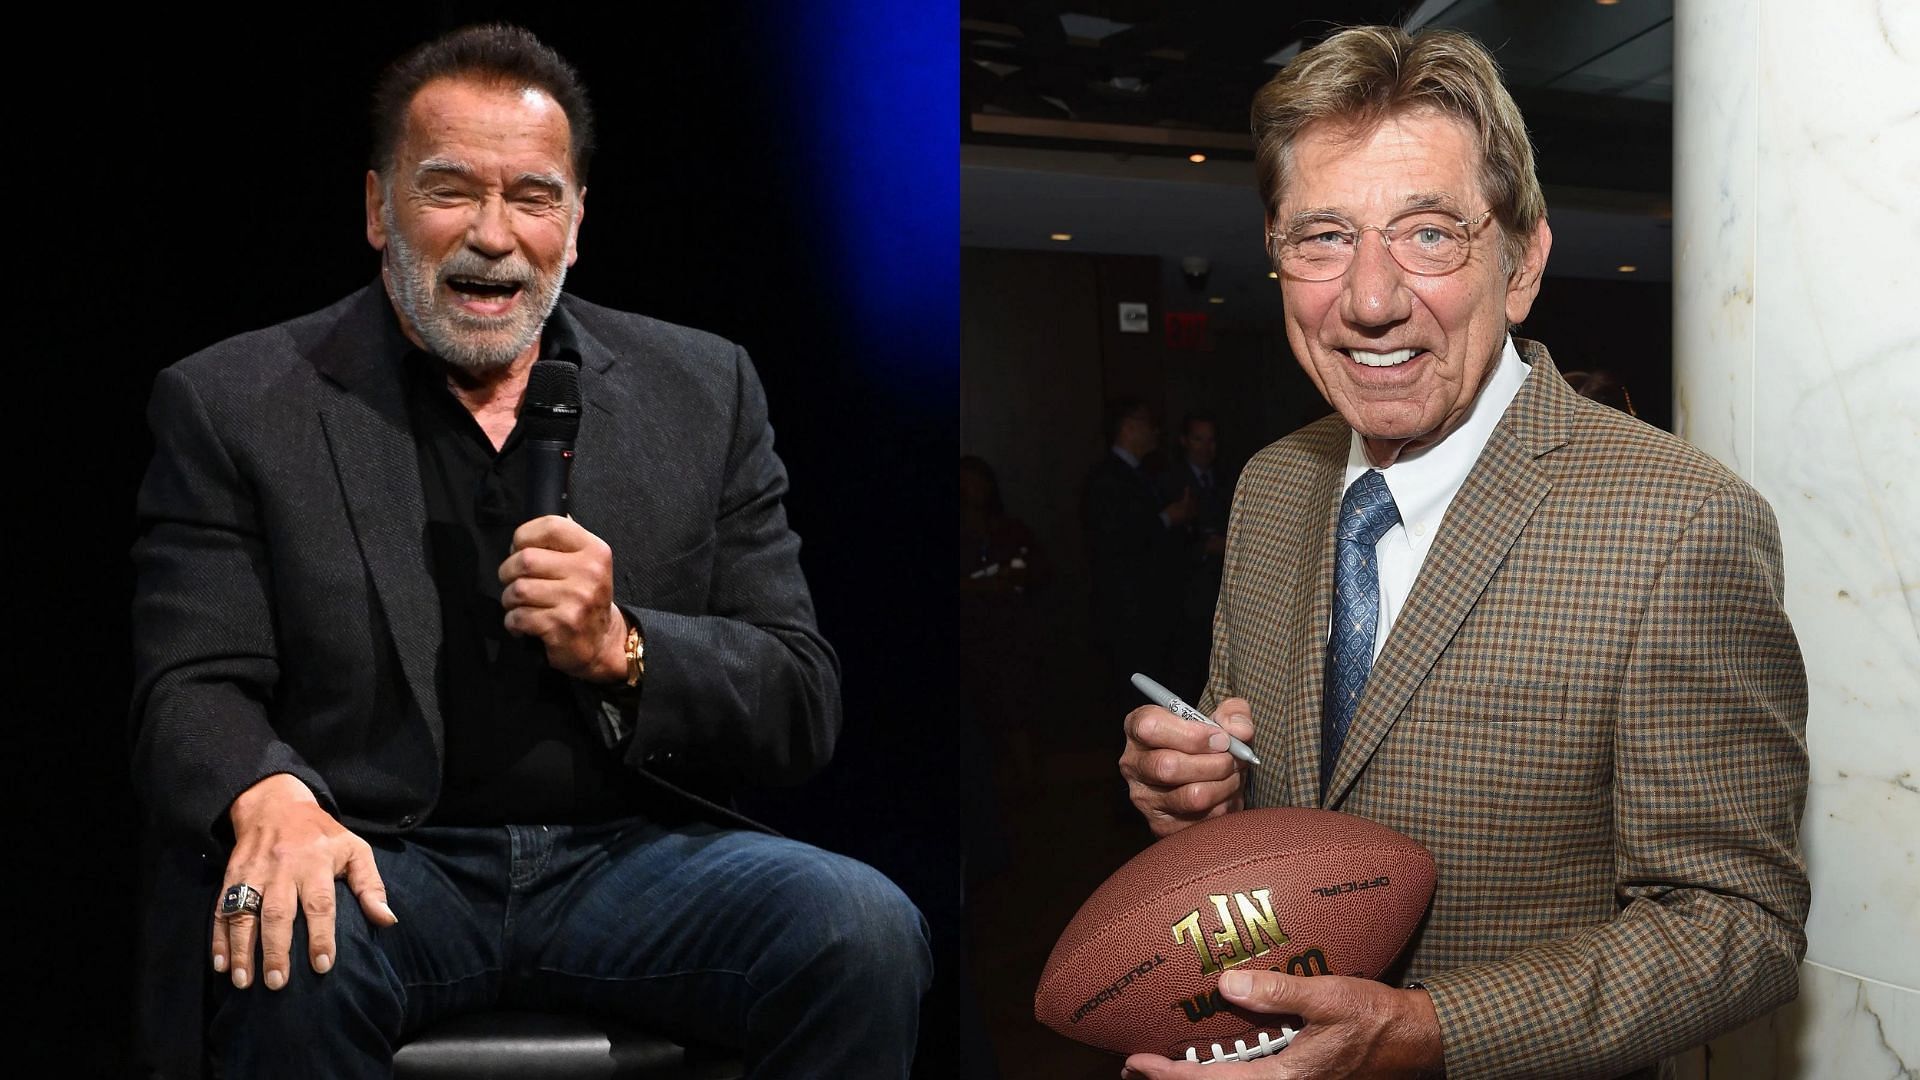 Arnold Schwarzenegger has a fun story to share about New York Jets legend Joe Namath